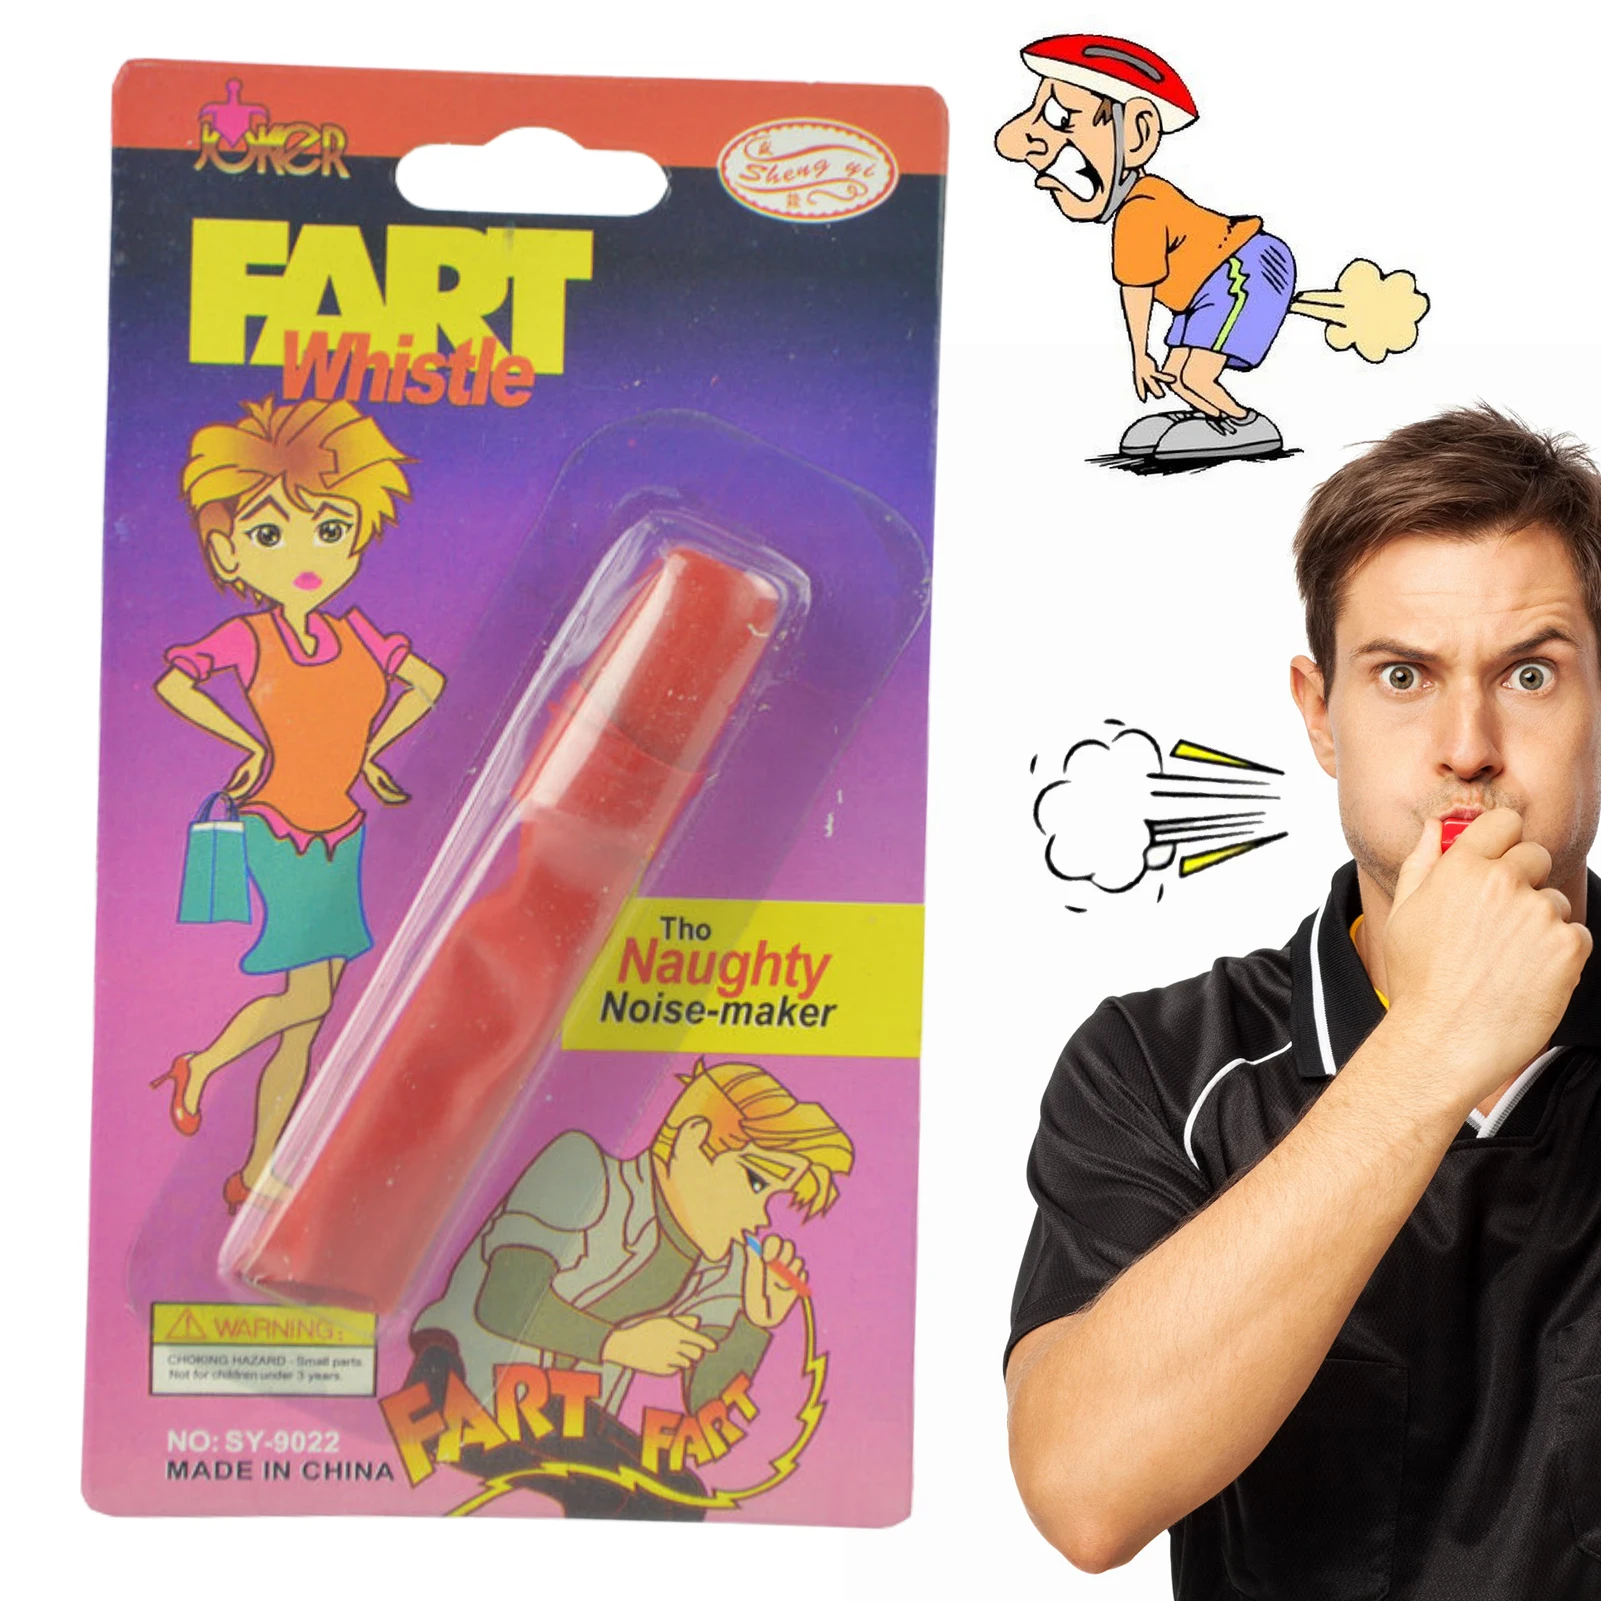 

Fart Whistle Classic Jokes Fart Whistle Funny Joke Prank Toy Great For Pranksters Jokes & Parent-Child Time Random Color